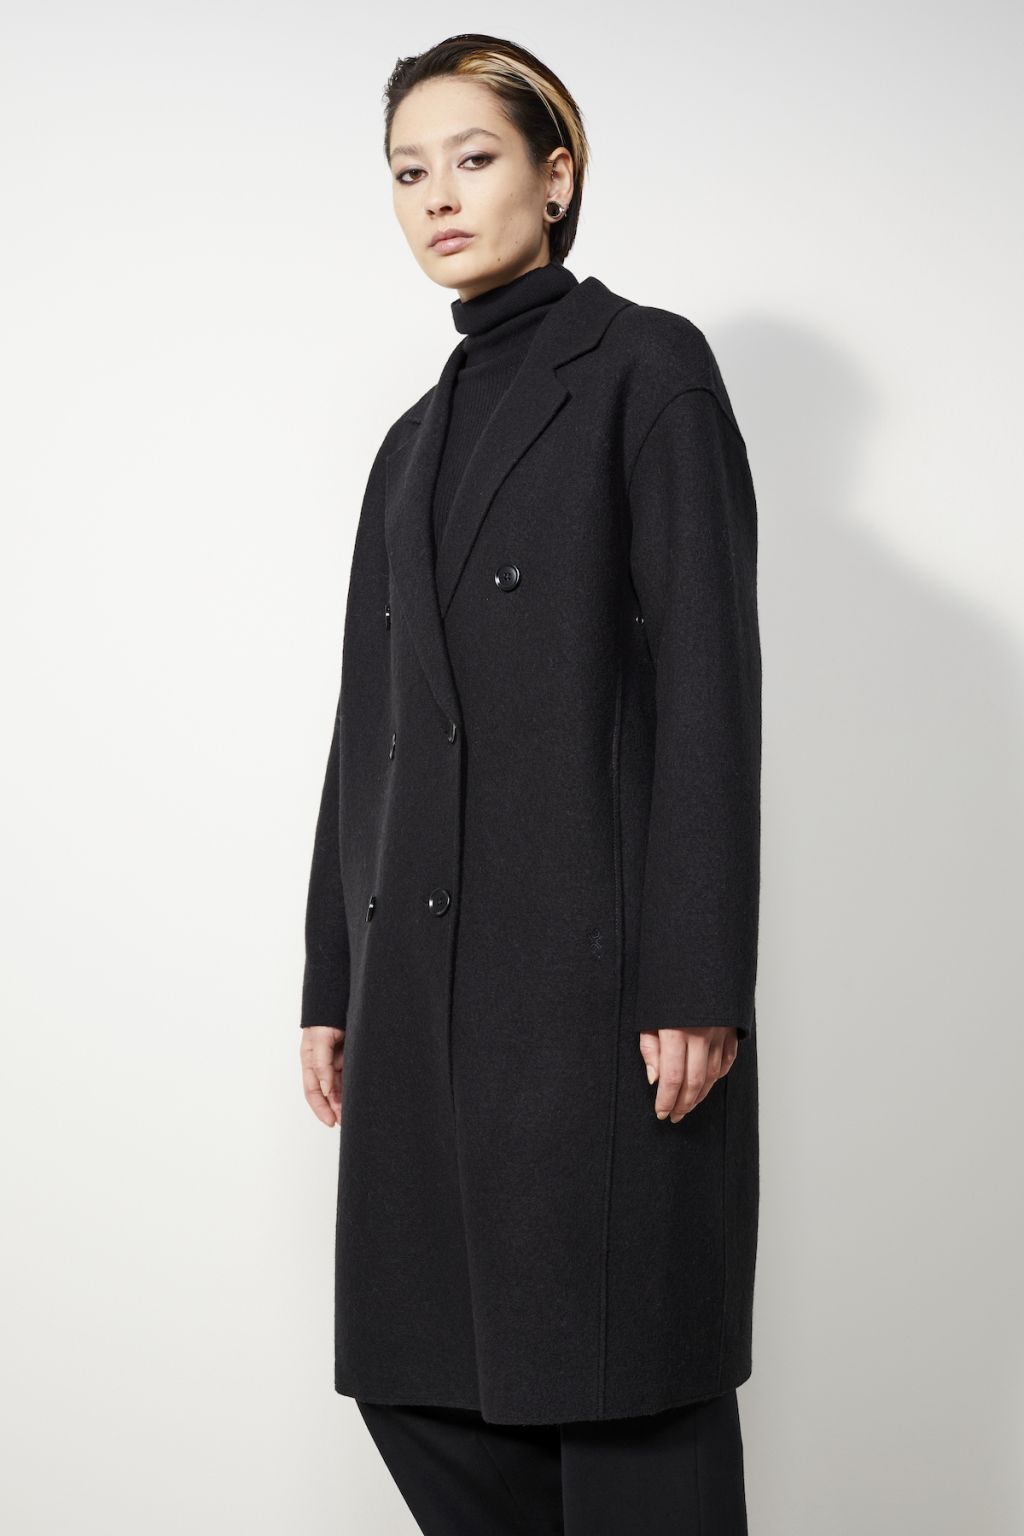 Coat Nicollet Black L